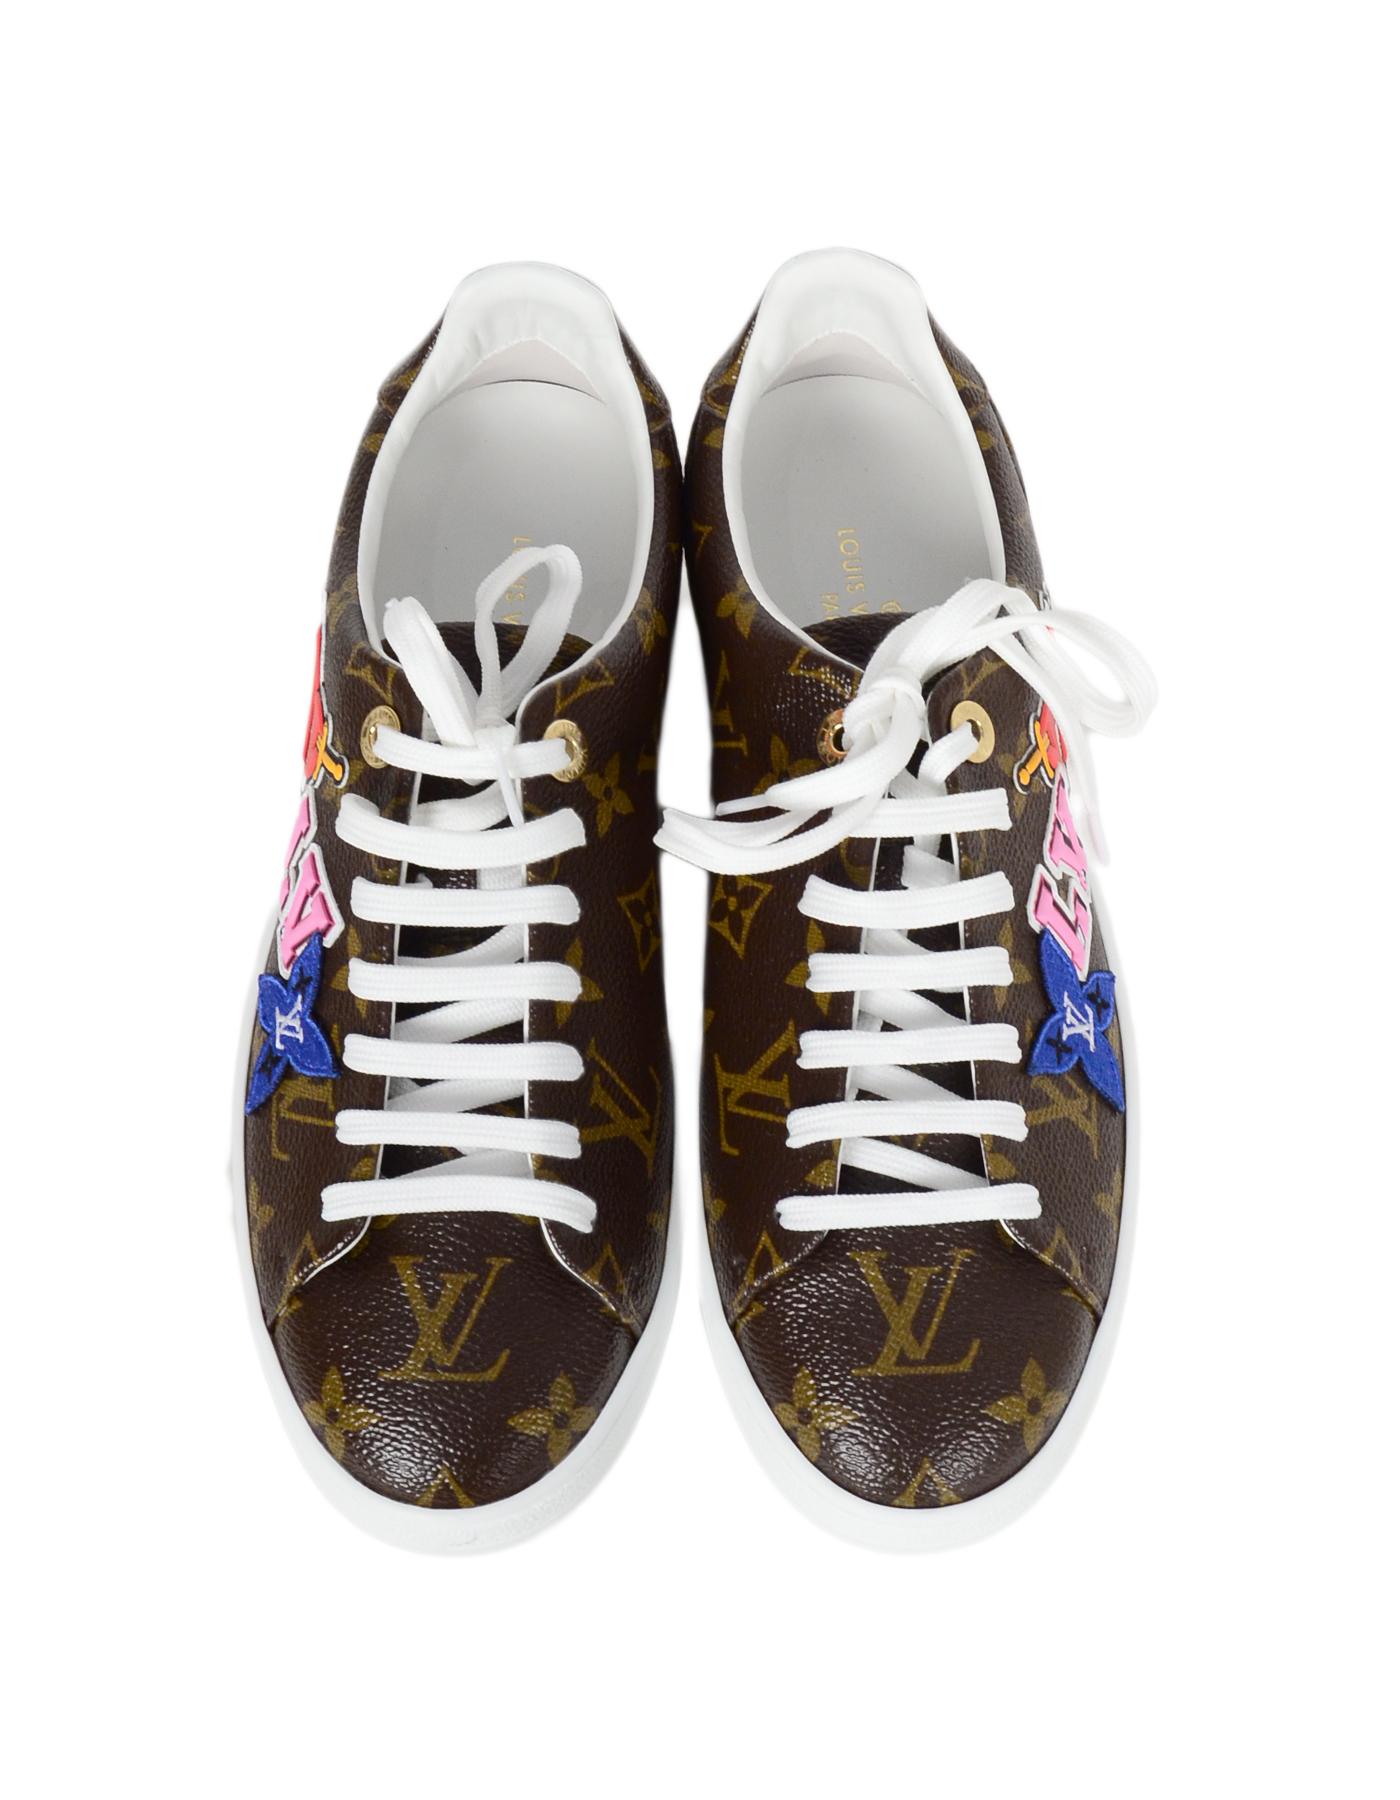 Gray Louis Vuitton New 2018 Monogram Frontrow Patchwork Sneakers sz 37.5